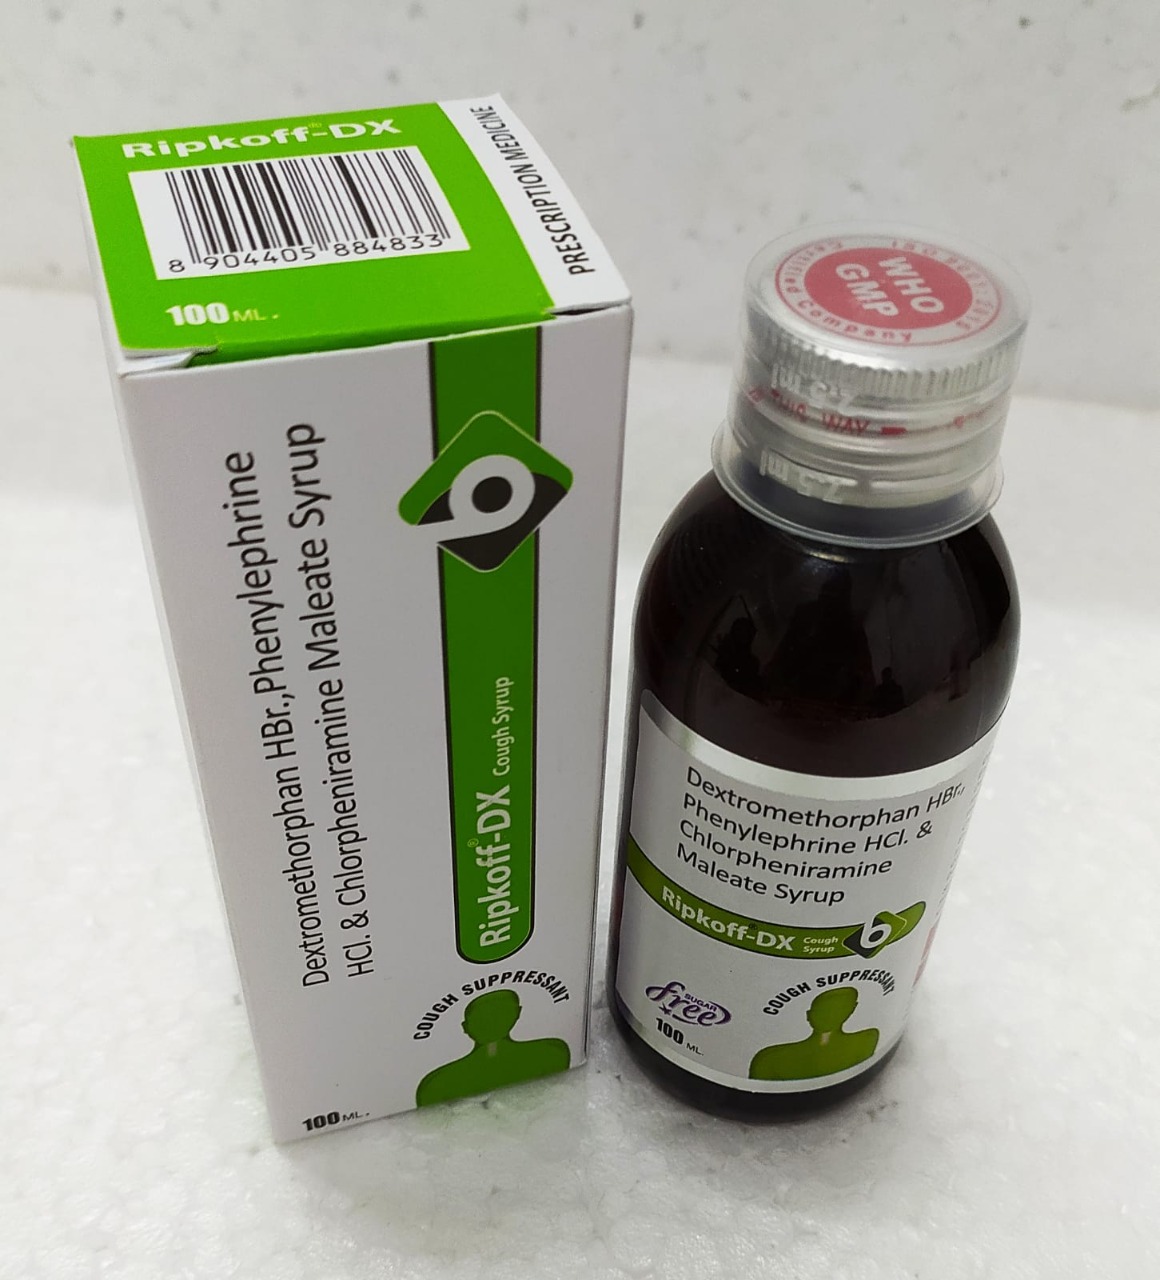 chlorpheniramine maleate 2mg + dextromethorphan hydrobromide10mg + phenylephrine hydrochloride 5mg